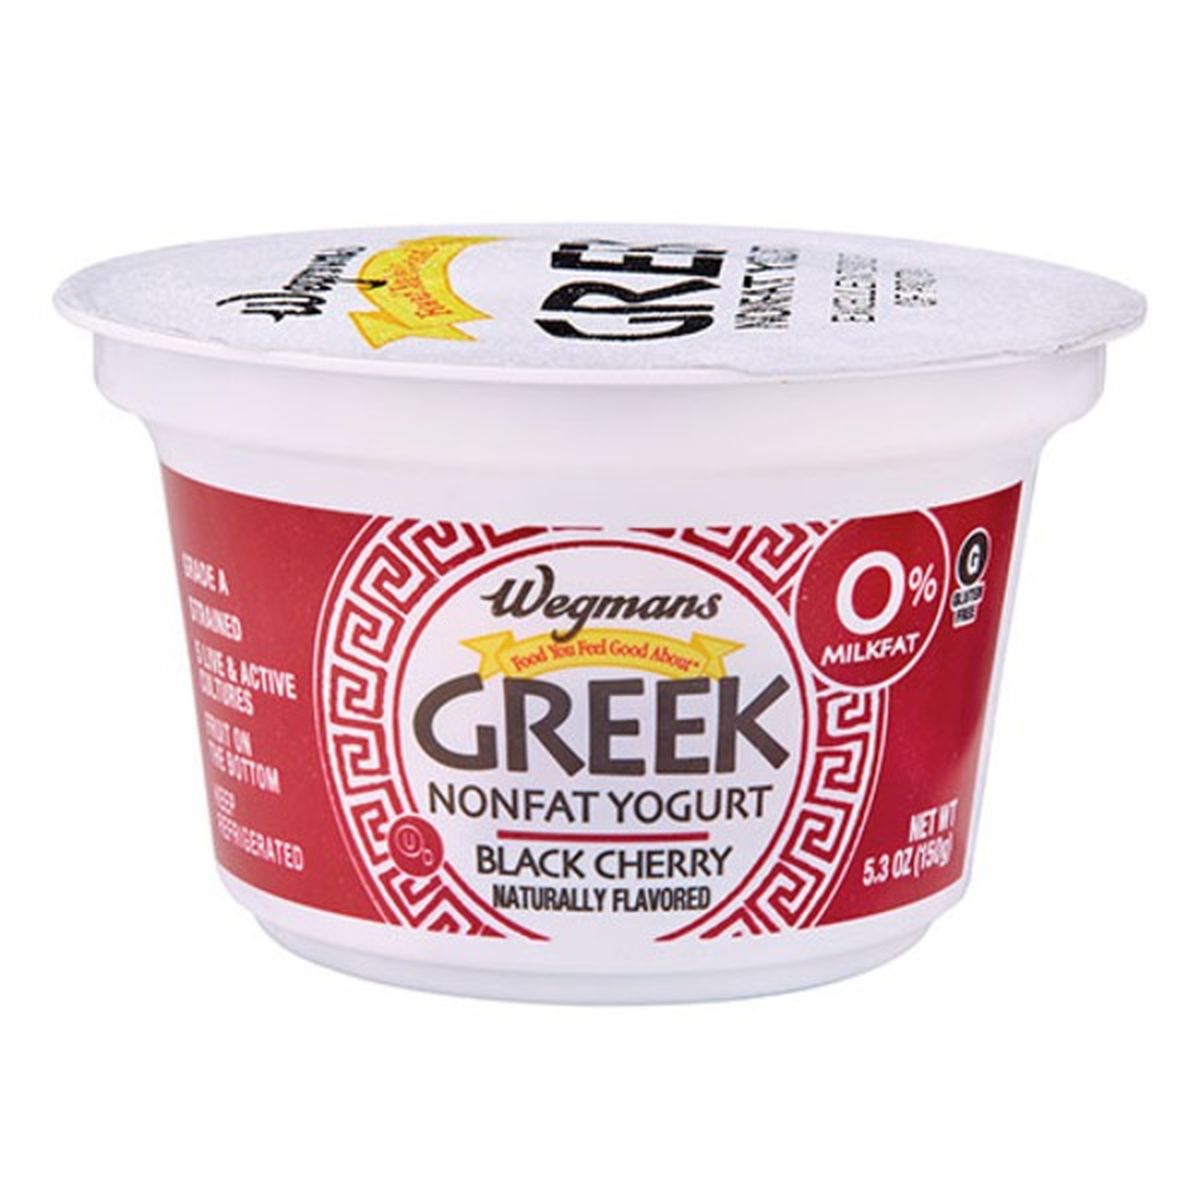 Calories in Wegmans Greek Black Cherry Nonfat Yogurt